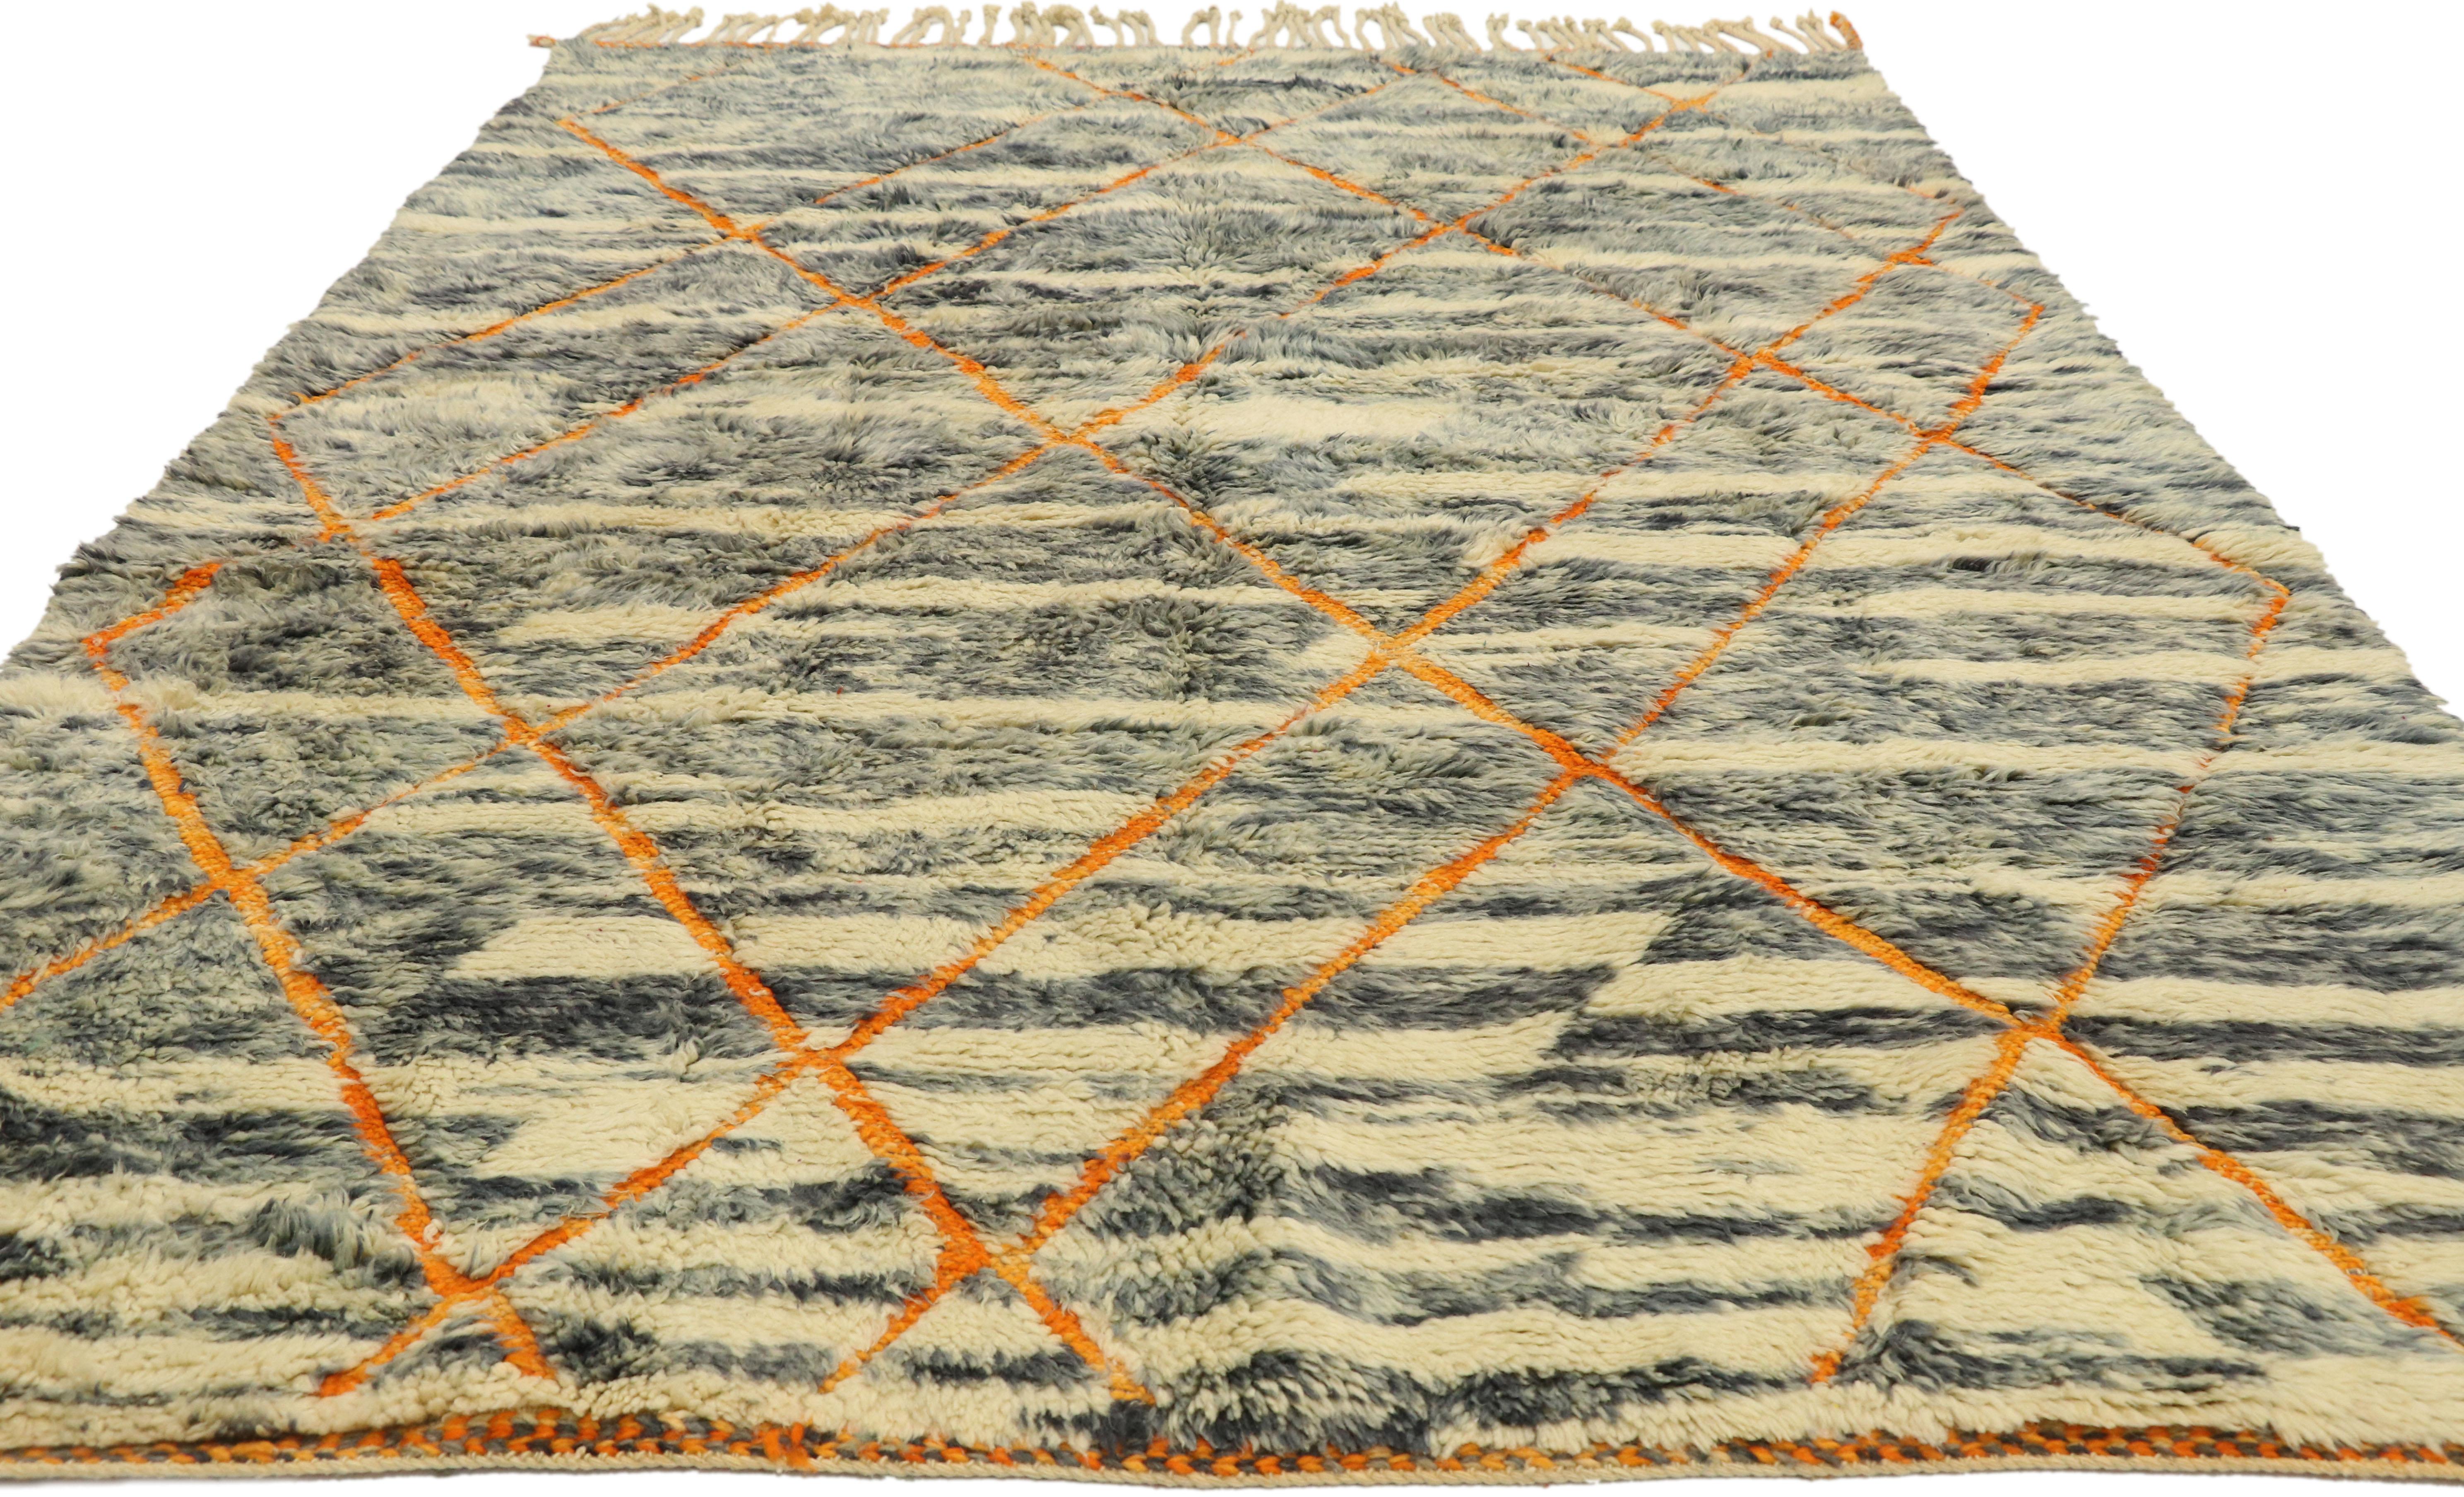 Tribal New Contemporary Beni Mrirt Carpet, Berber Moroccan Rug